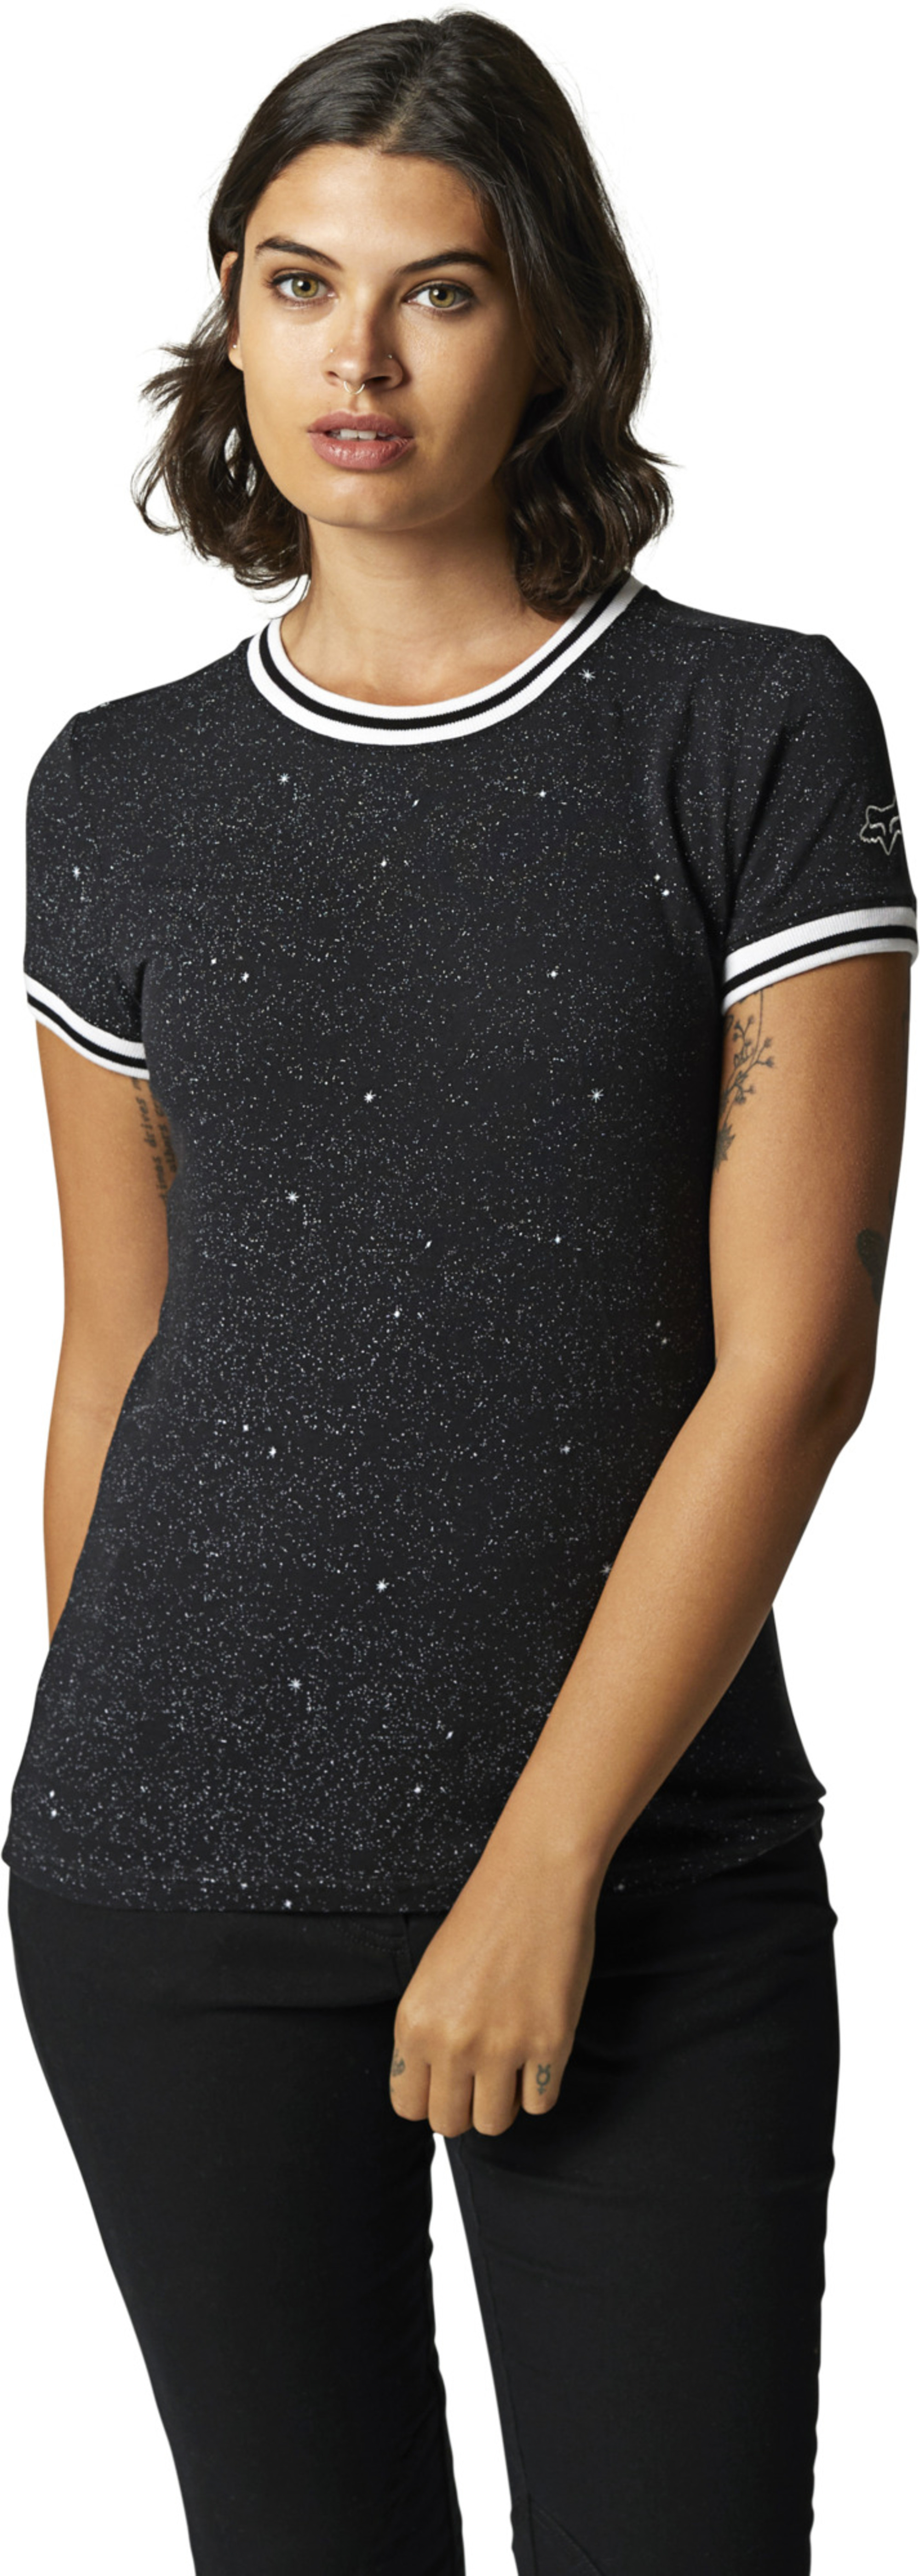 fox racing t-shirt shirts for womens constellation